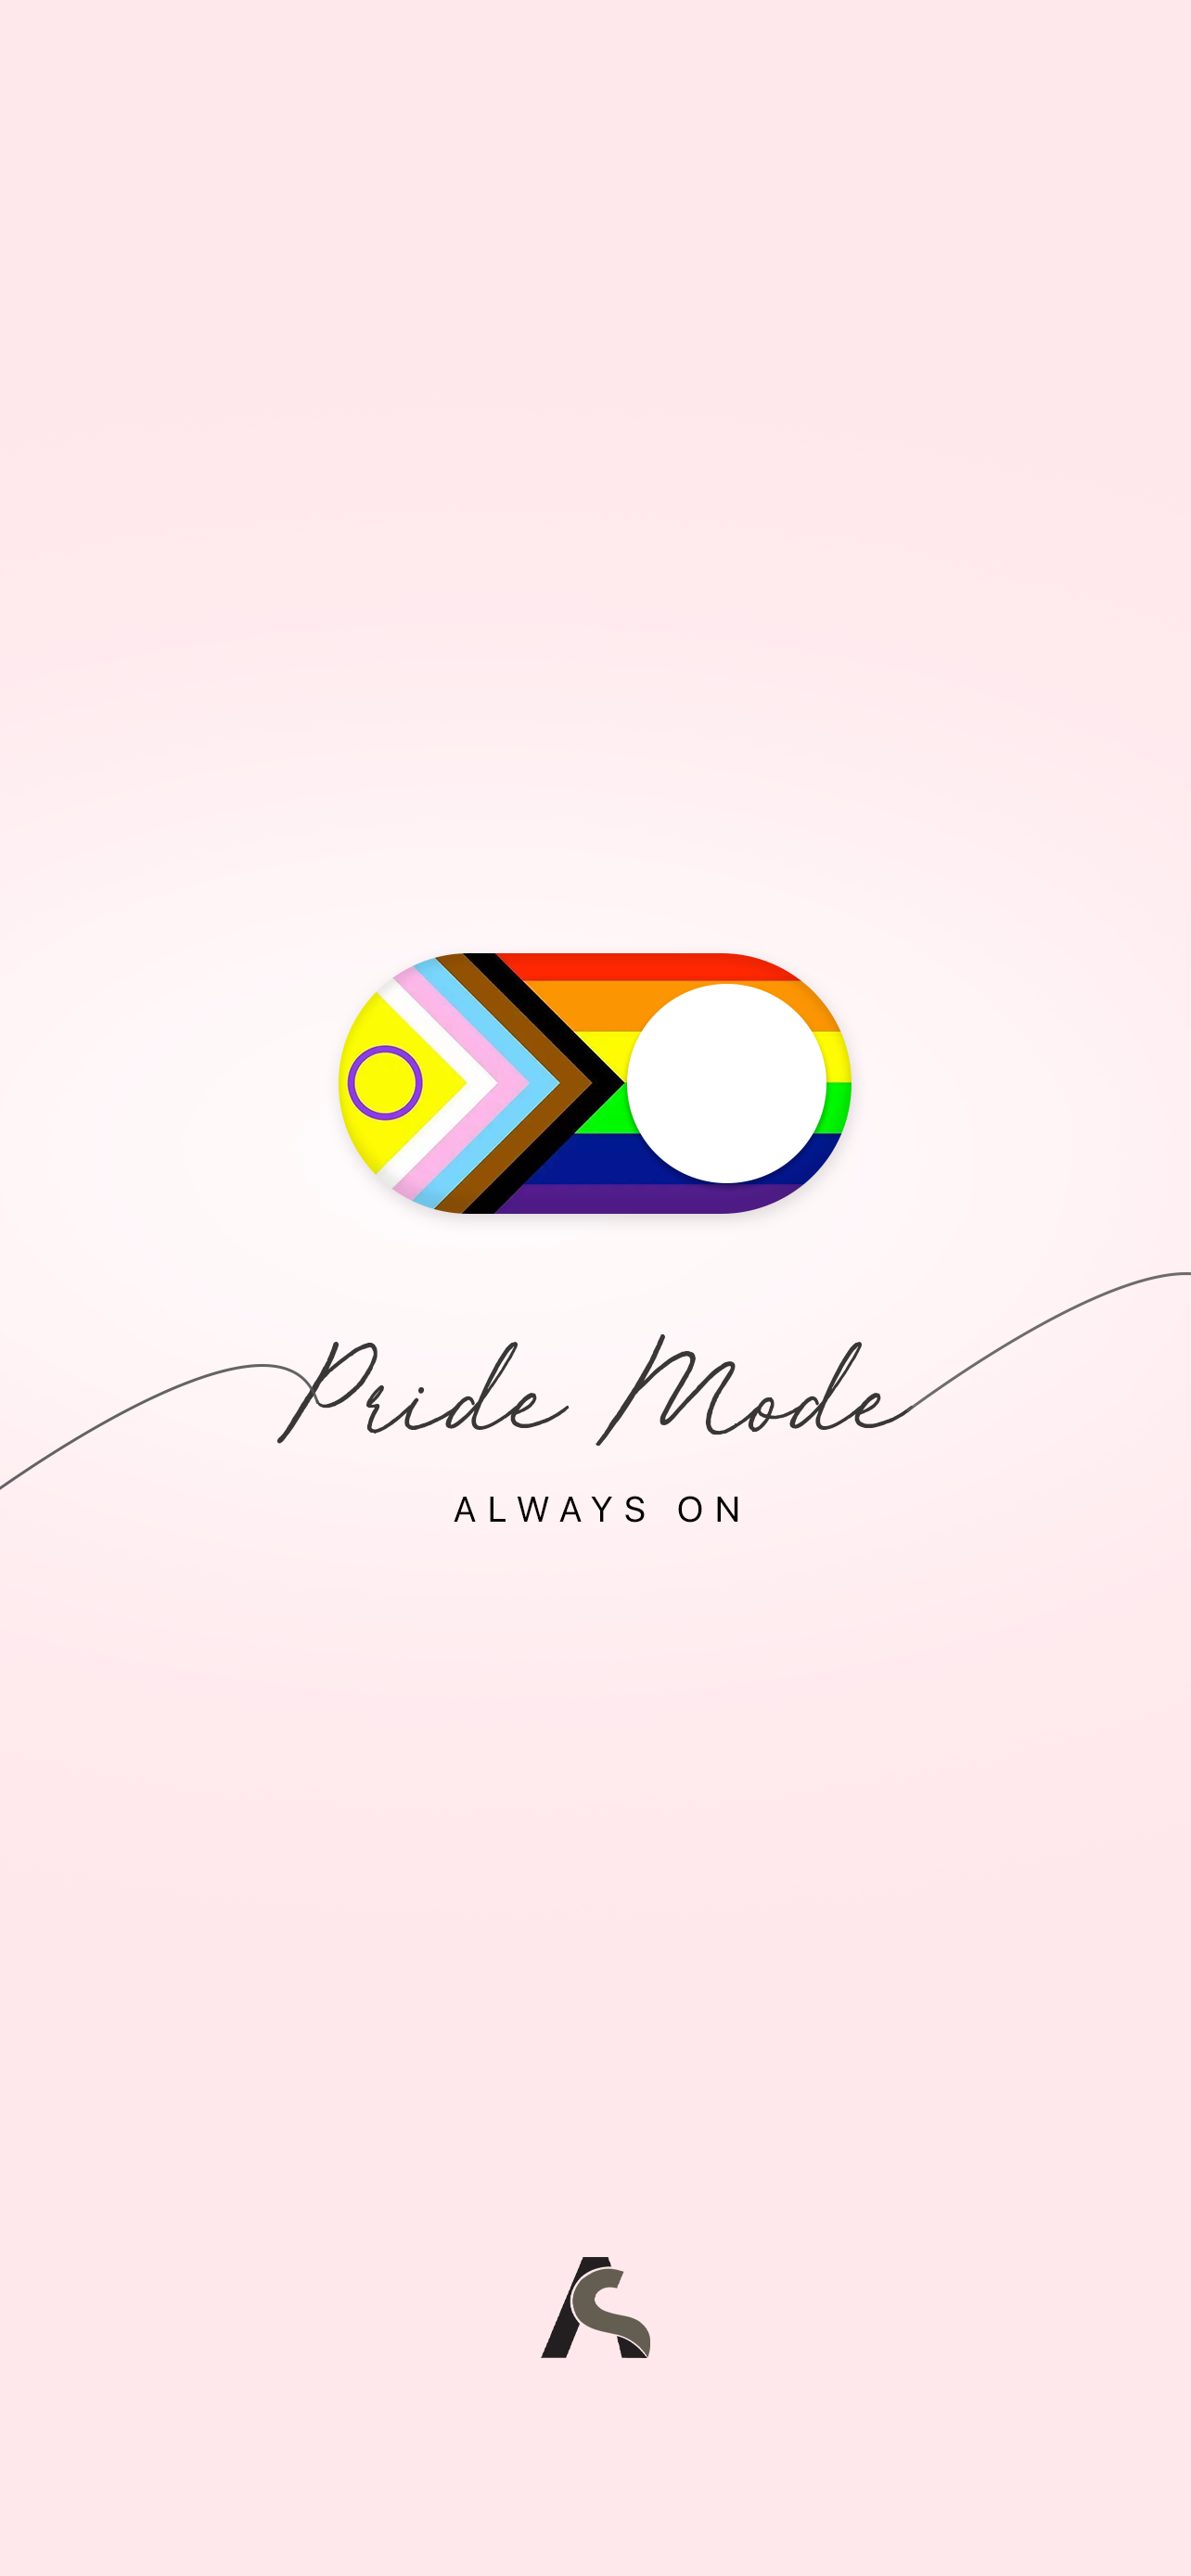 Free Pride Wallpaper iPhone  Download in JPG  Templatenet